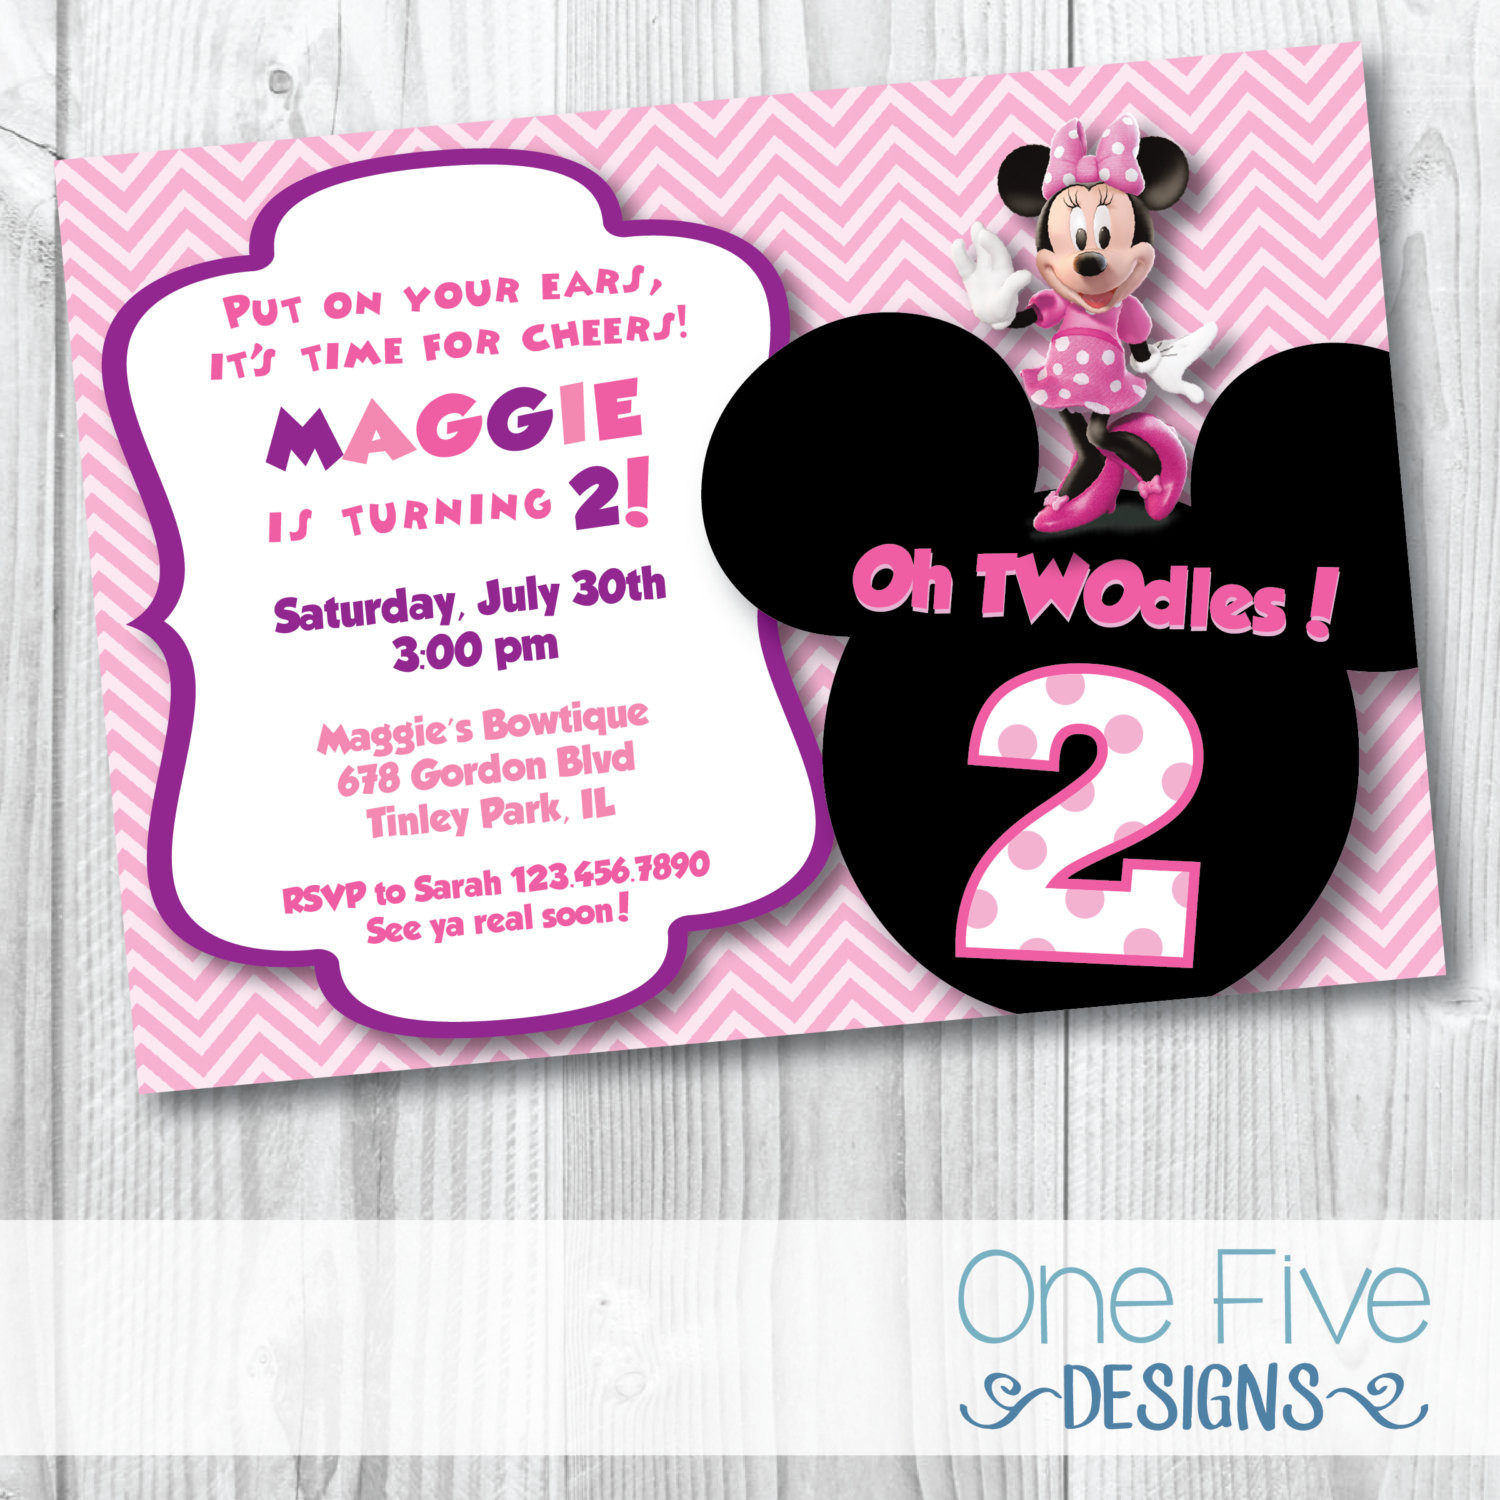 Minnie Mouse Birthday Invitations Printable
 Minnie Mouse Oh TWOdles Birthday Party Invitation